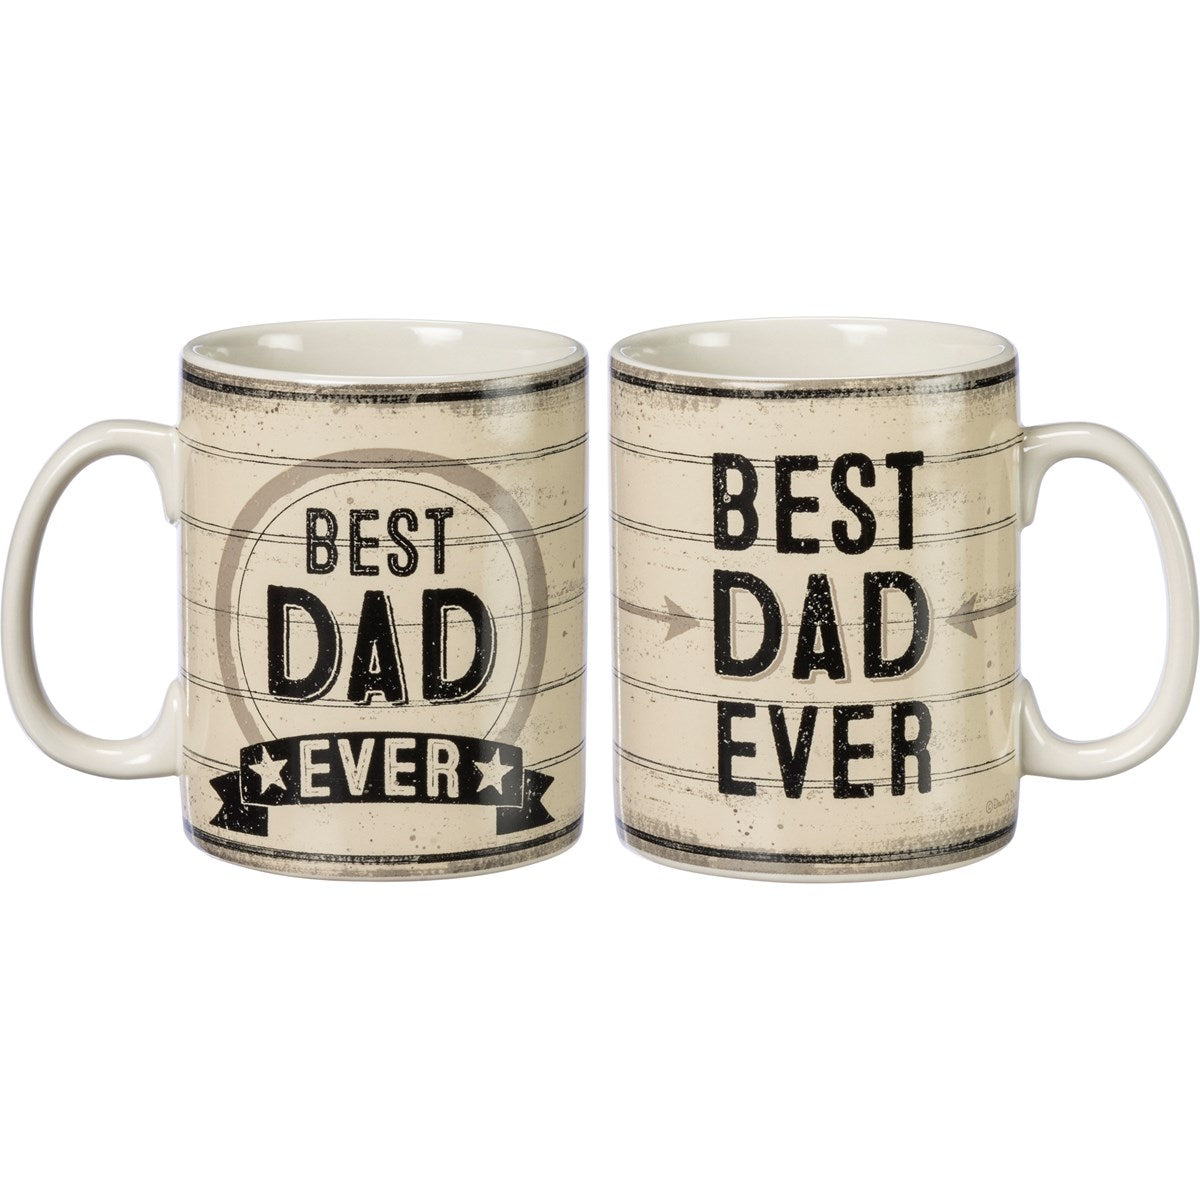 Best dad ever mug